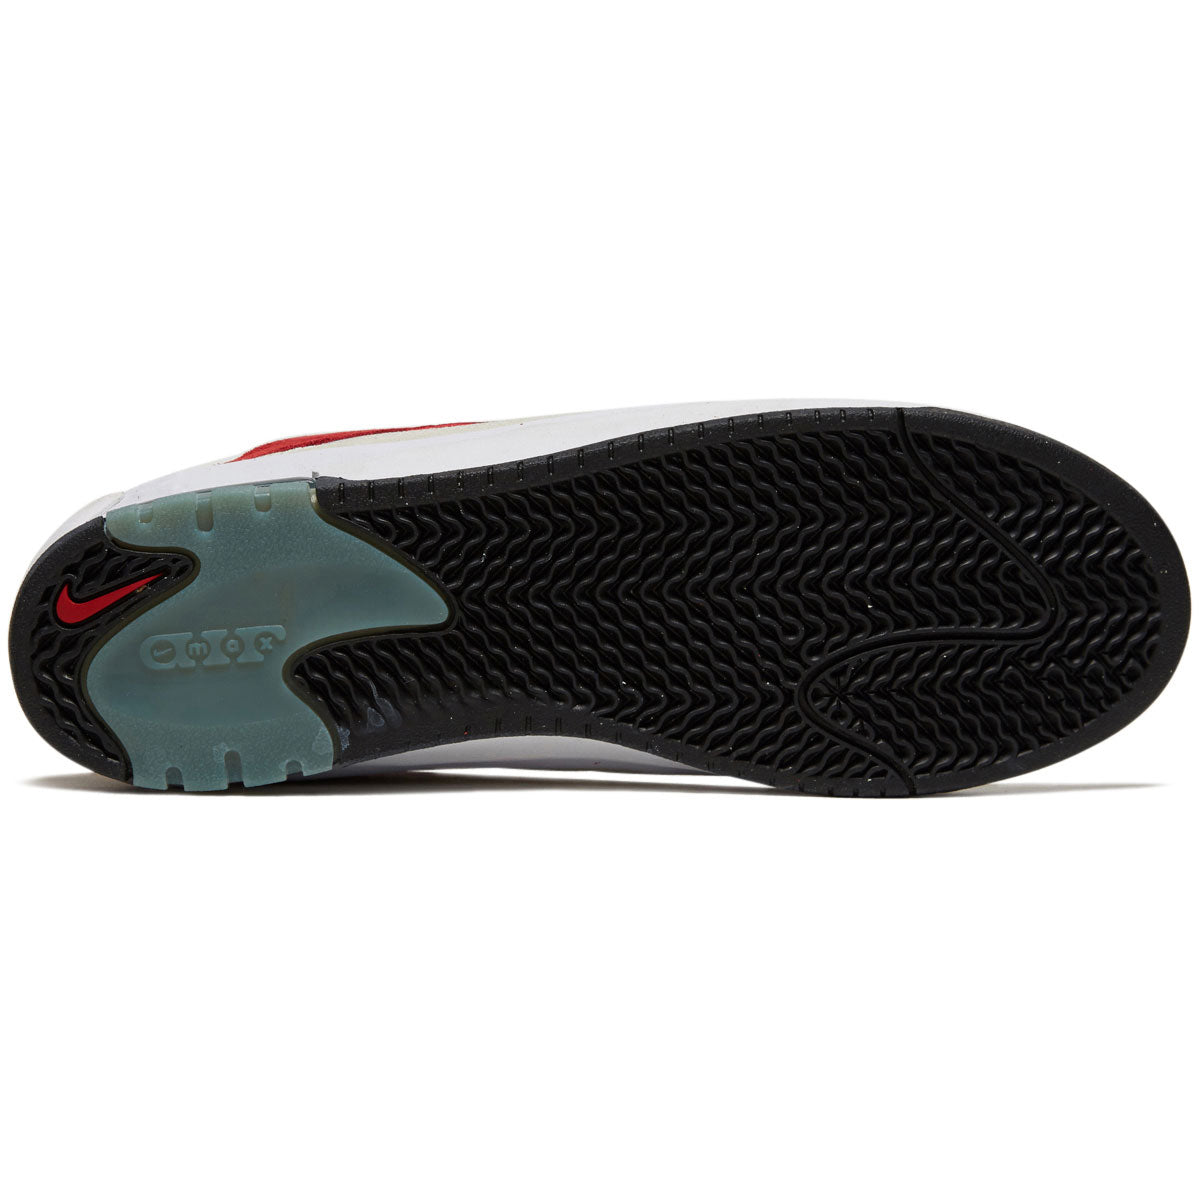 Nike SB Air Max Ishod Shoes - White/Varsity Red/Summit White image 4